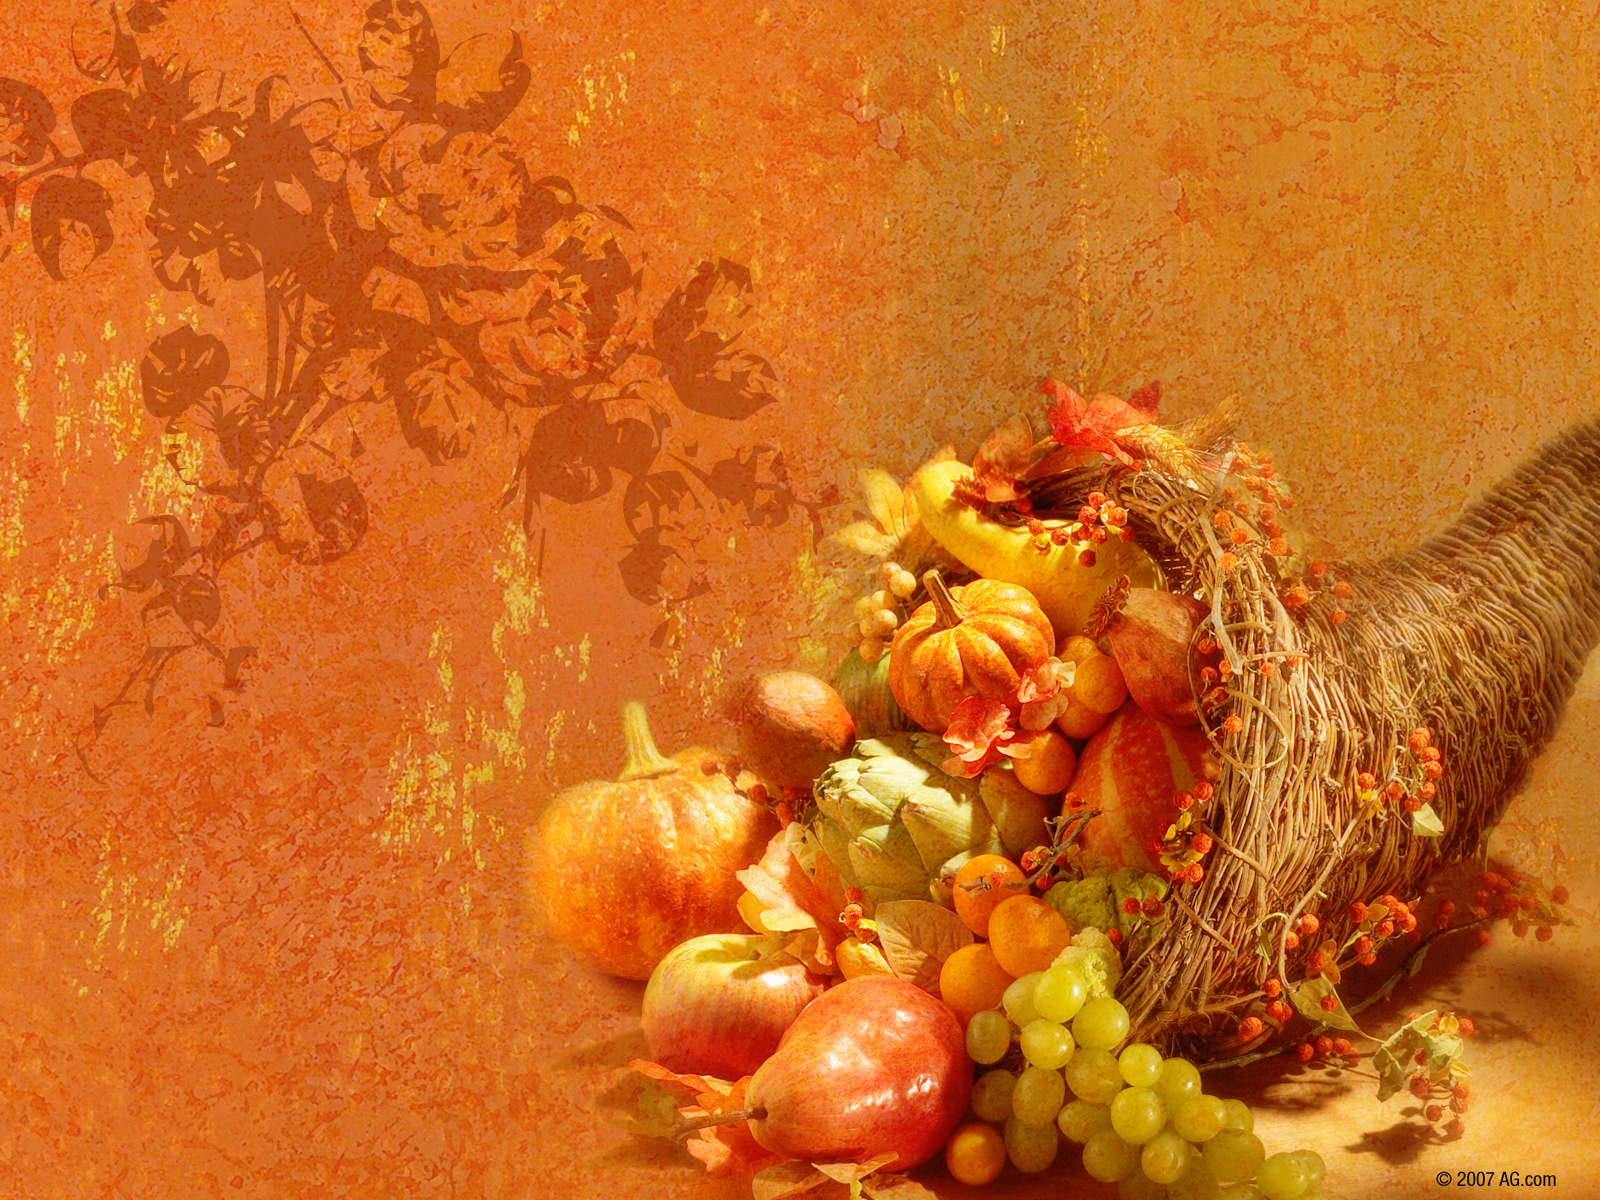 Thanksgiving Wallpaper Desktop In HD